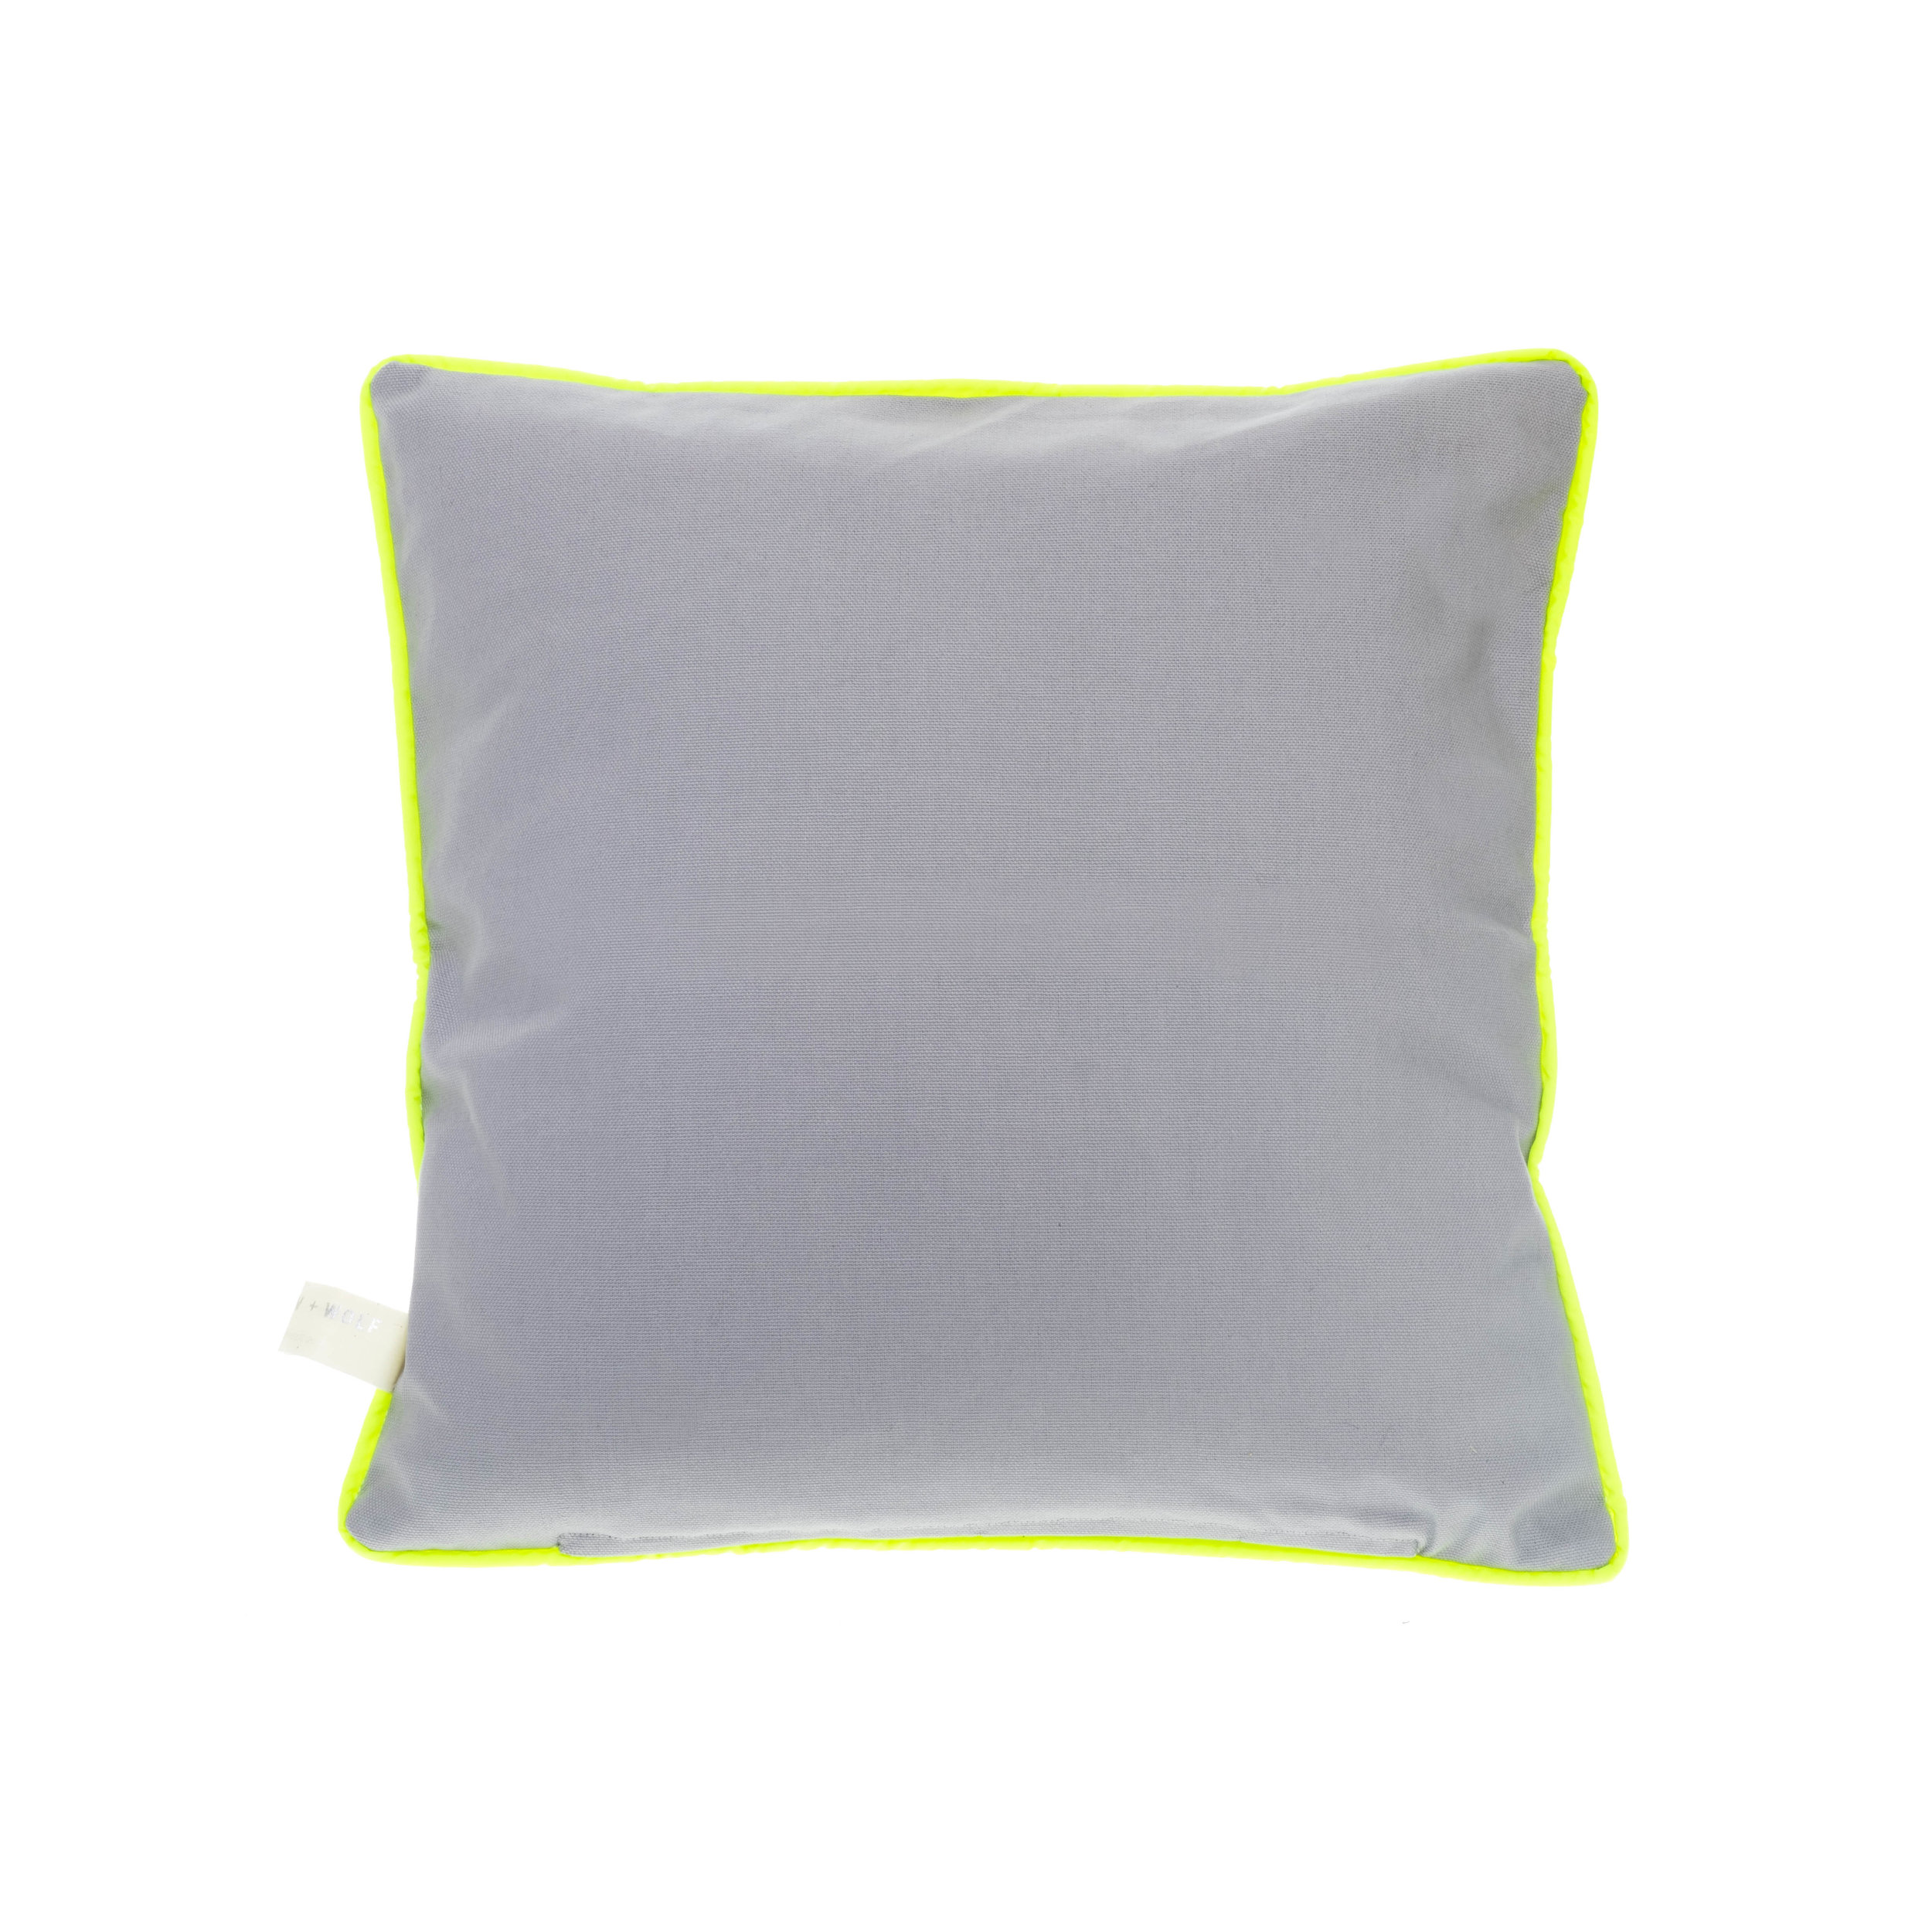 neon yellow cushion